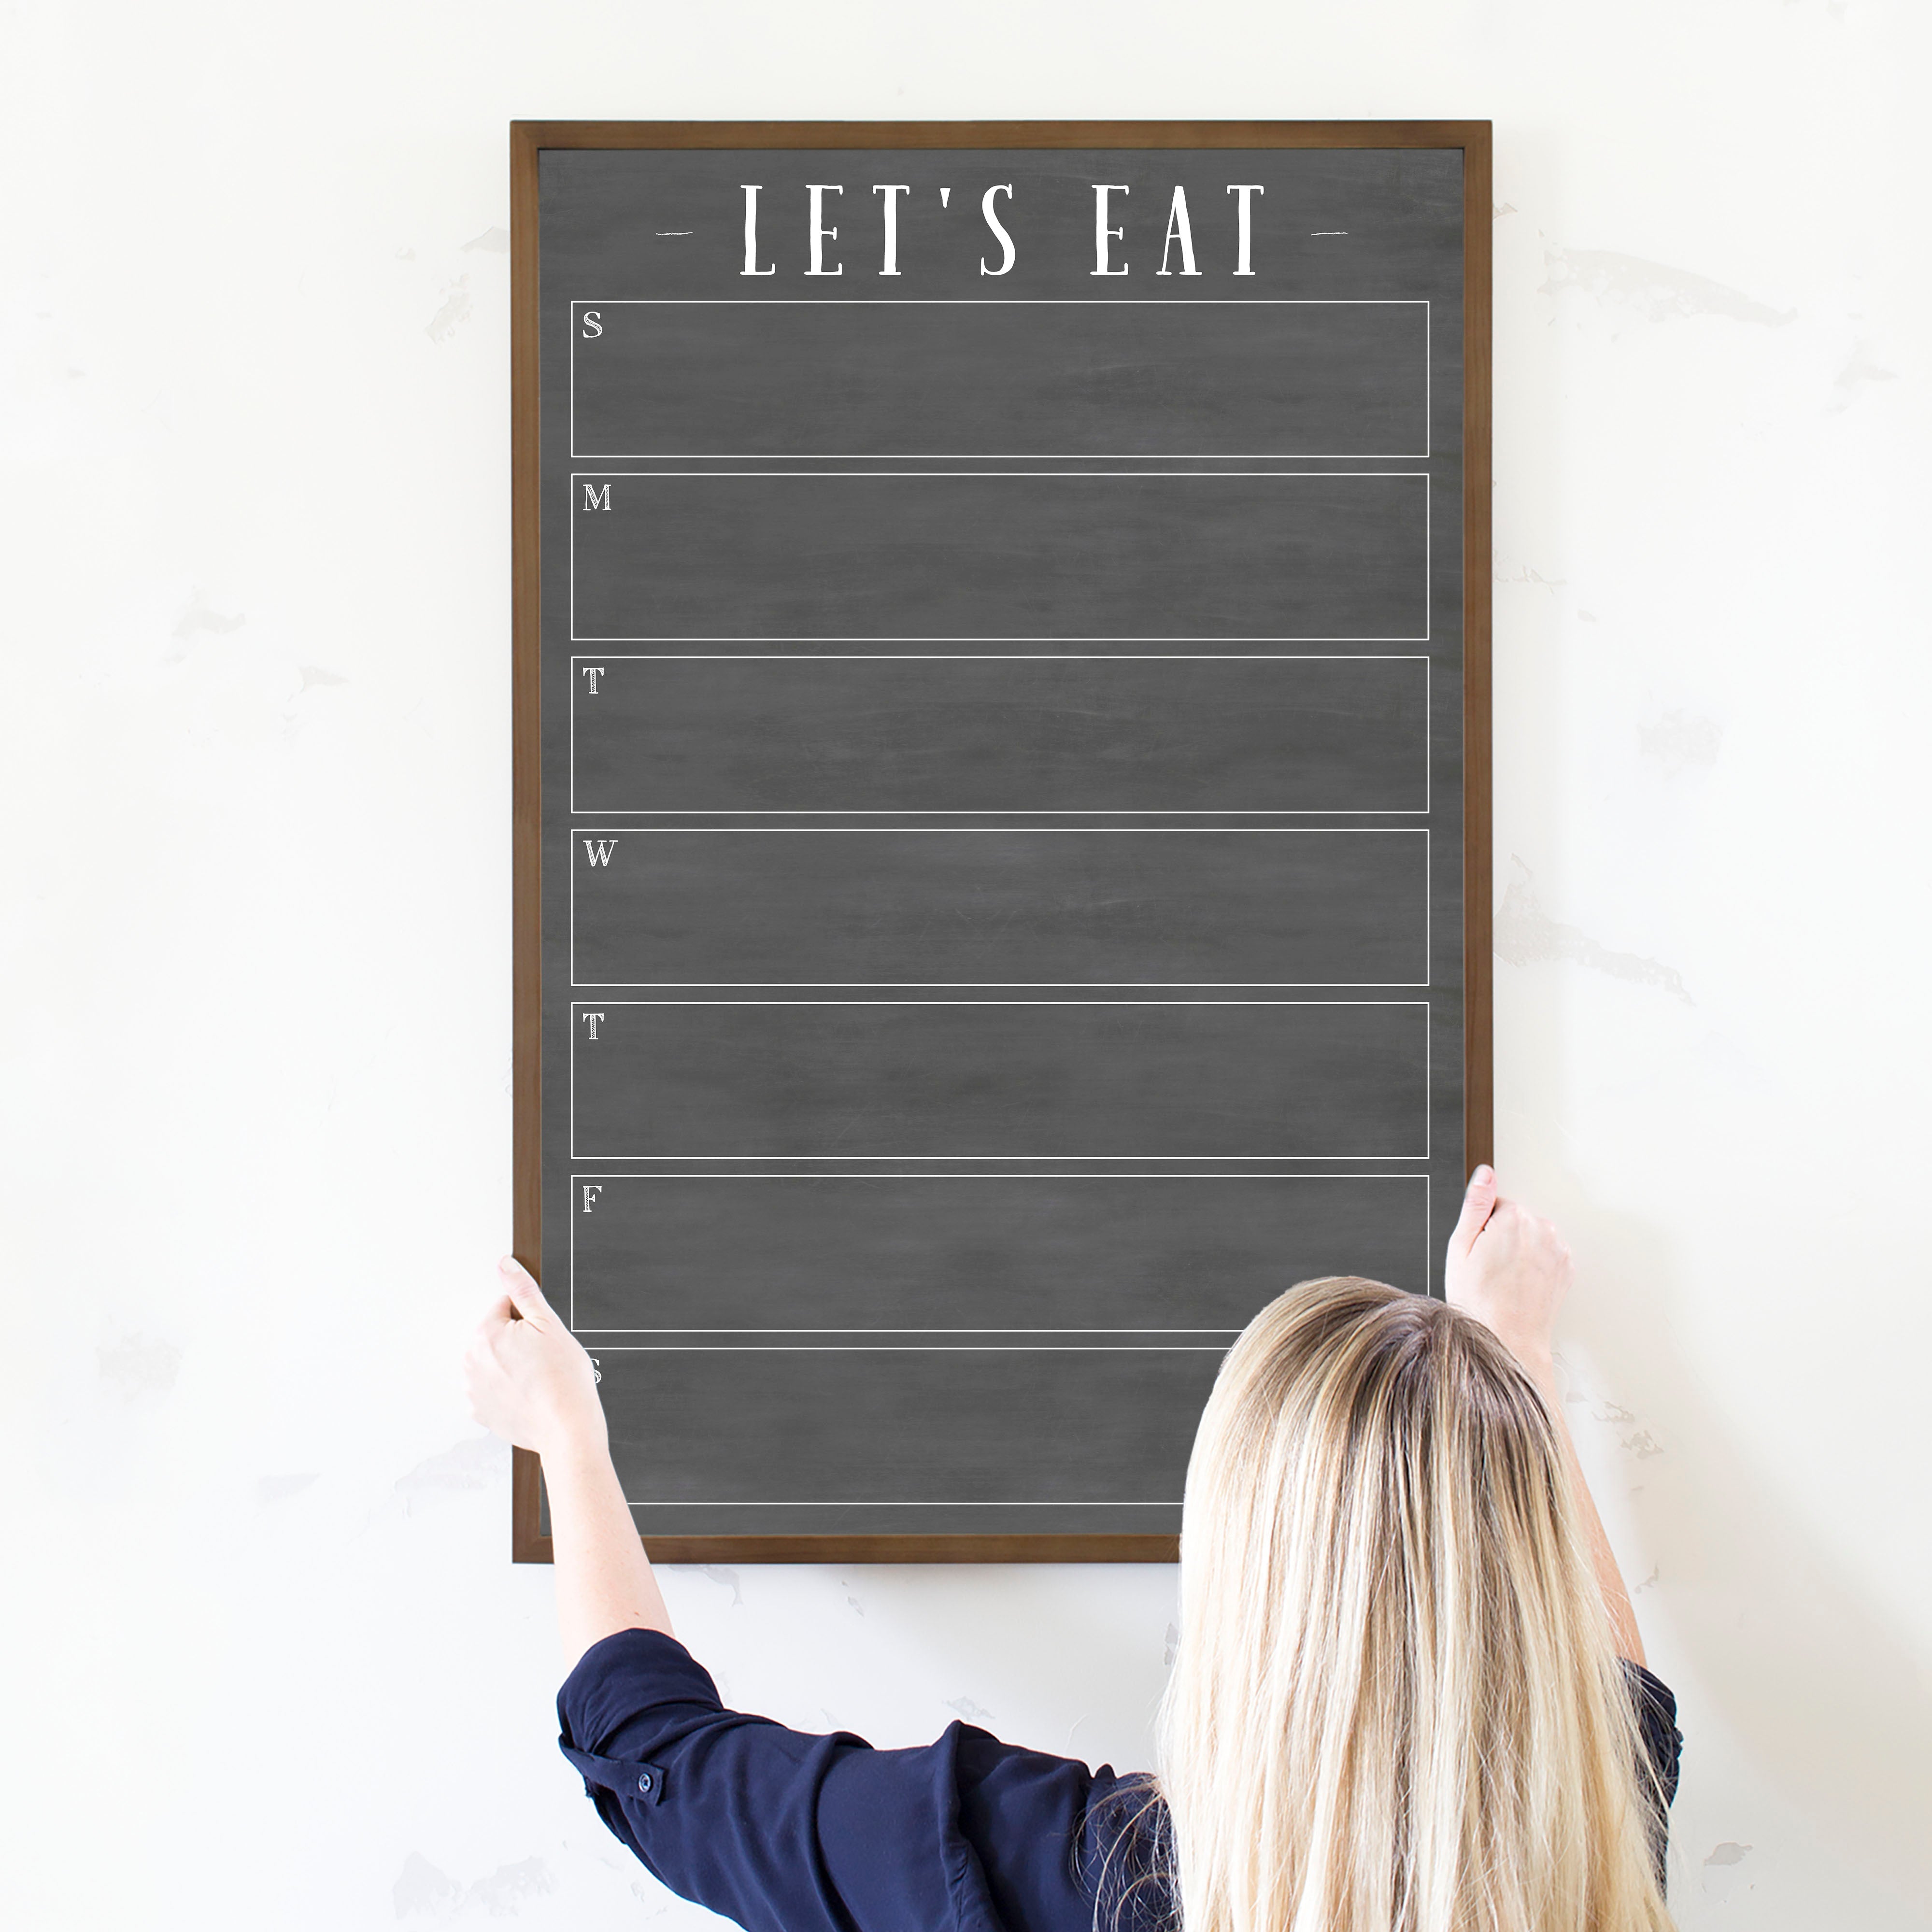 Weekly Framed Chalkboard Calendar | Vertical Swanson